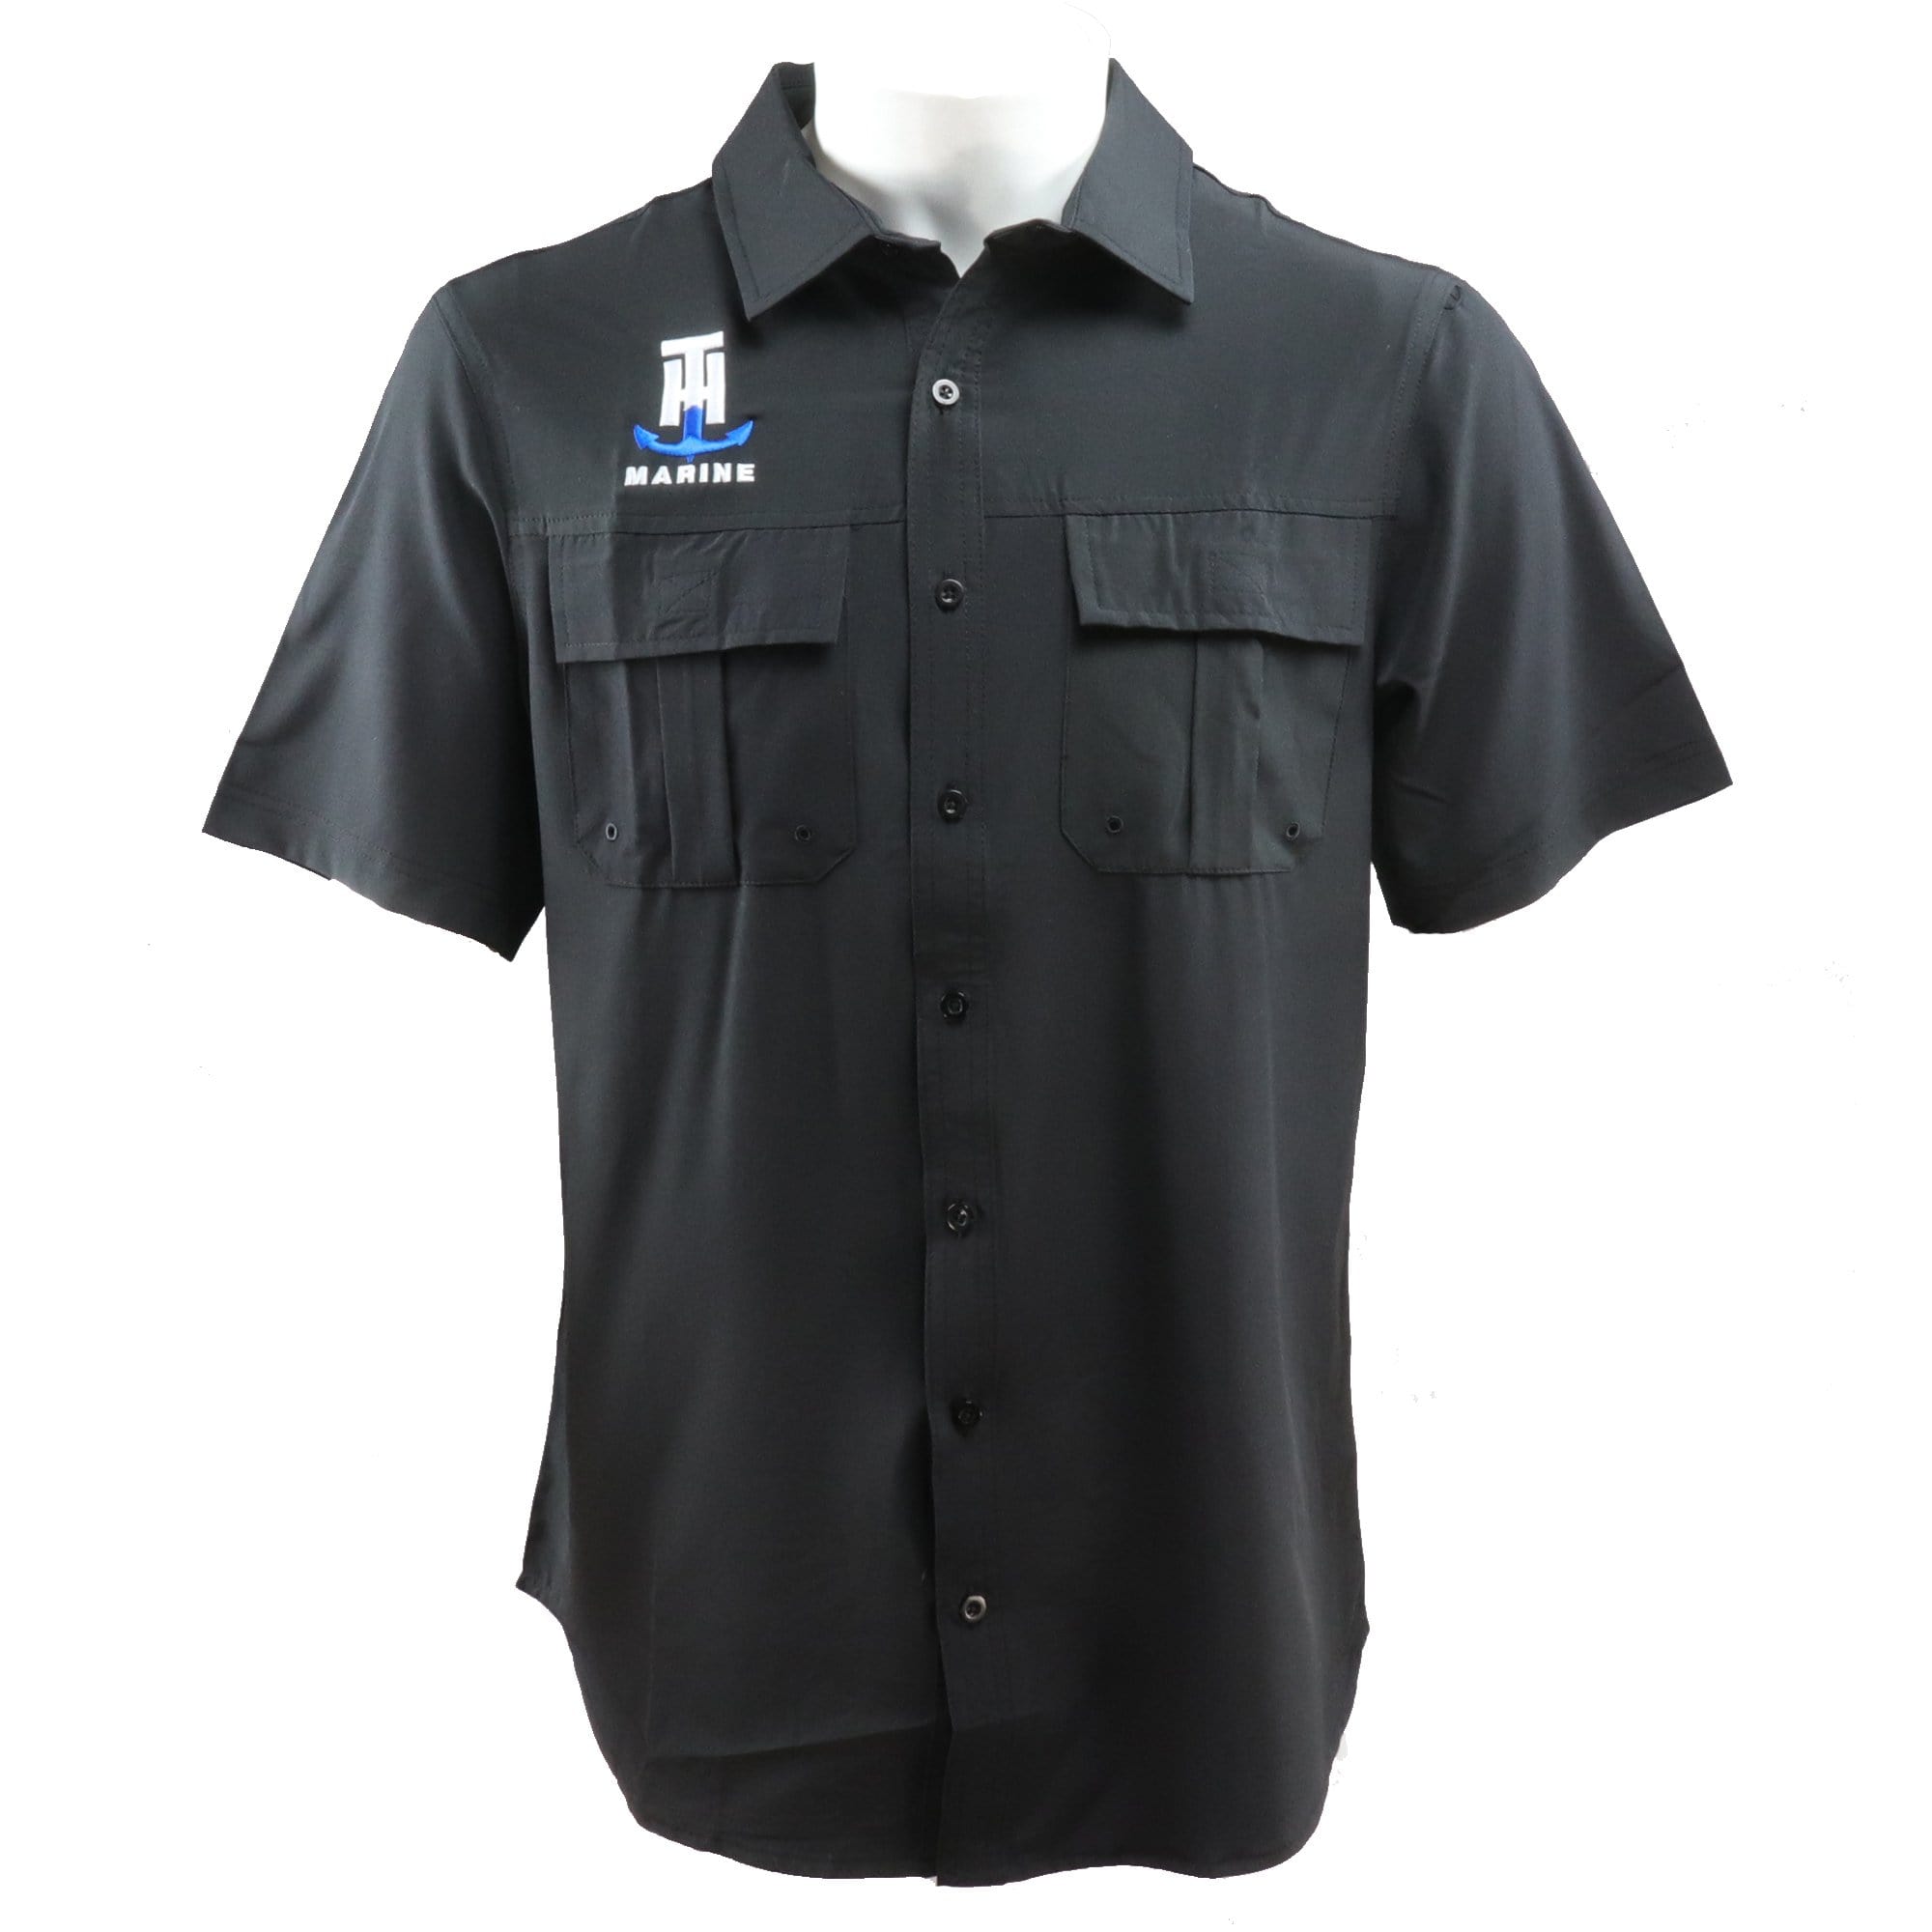 T-H Marine Black Performance Fishing Shirt XL